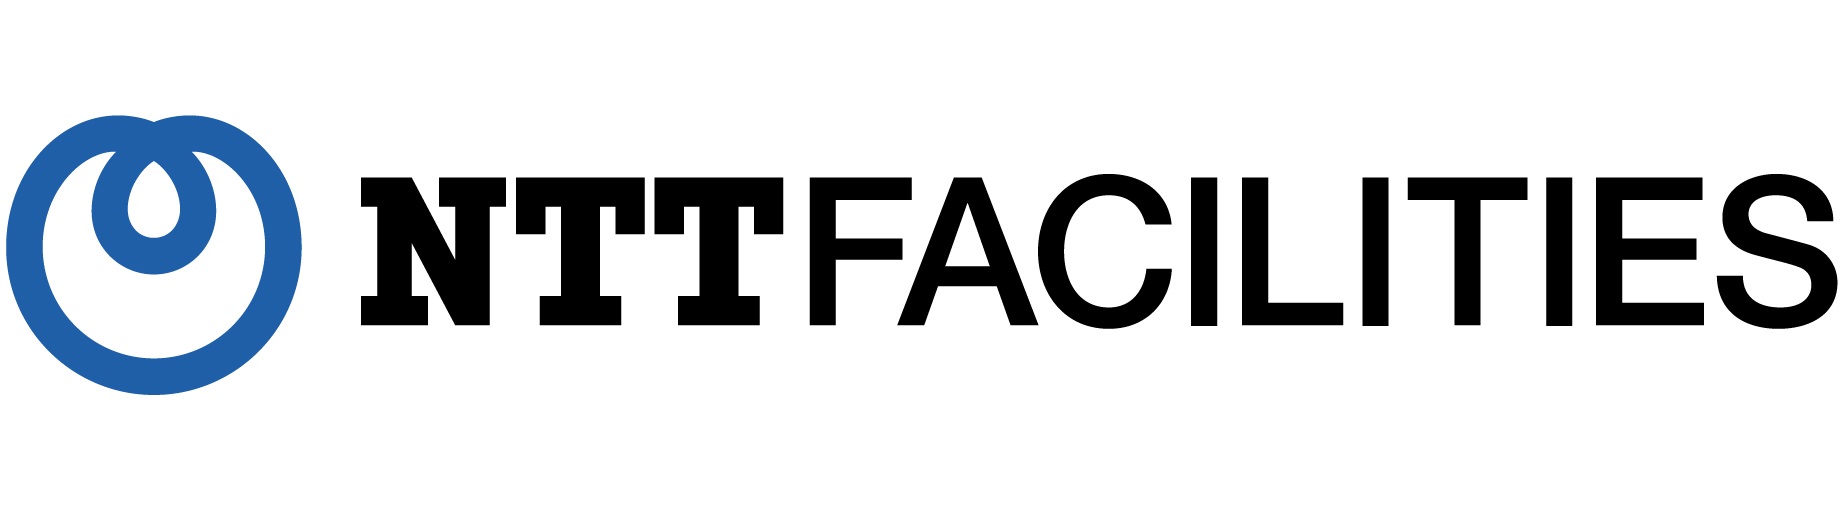 NTT_FACILITIES_logo